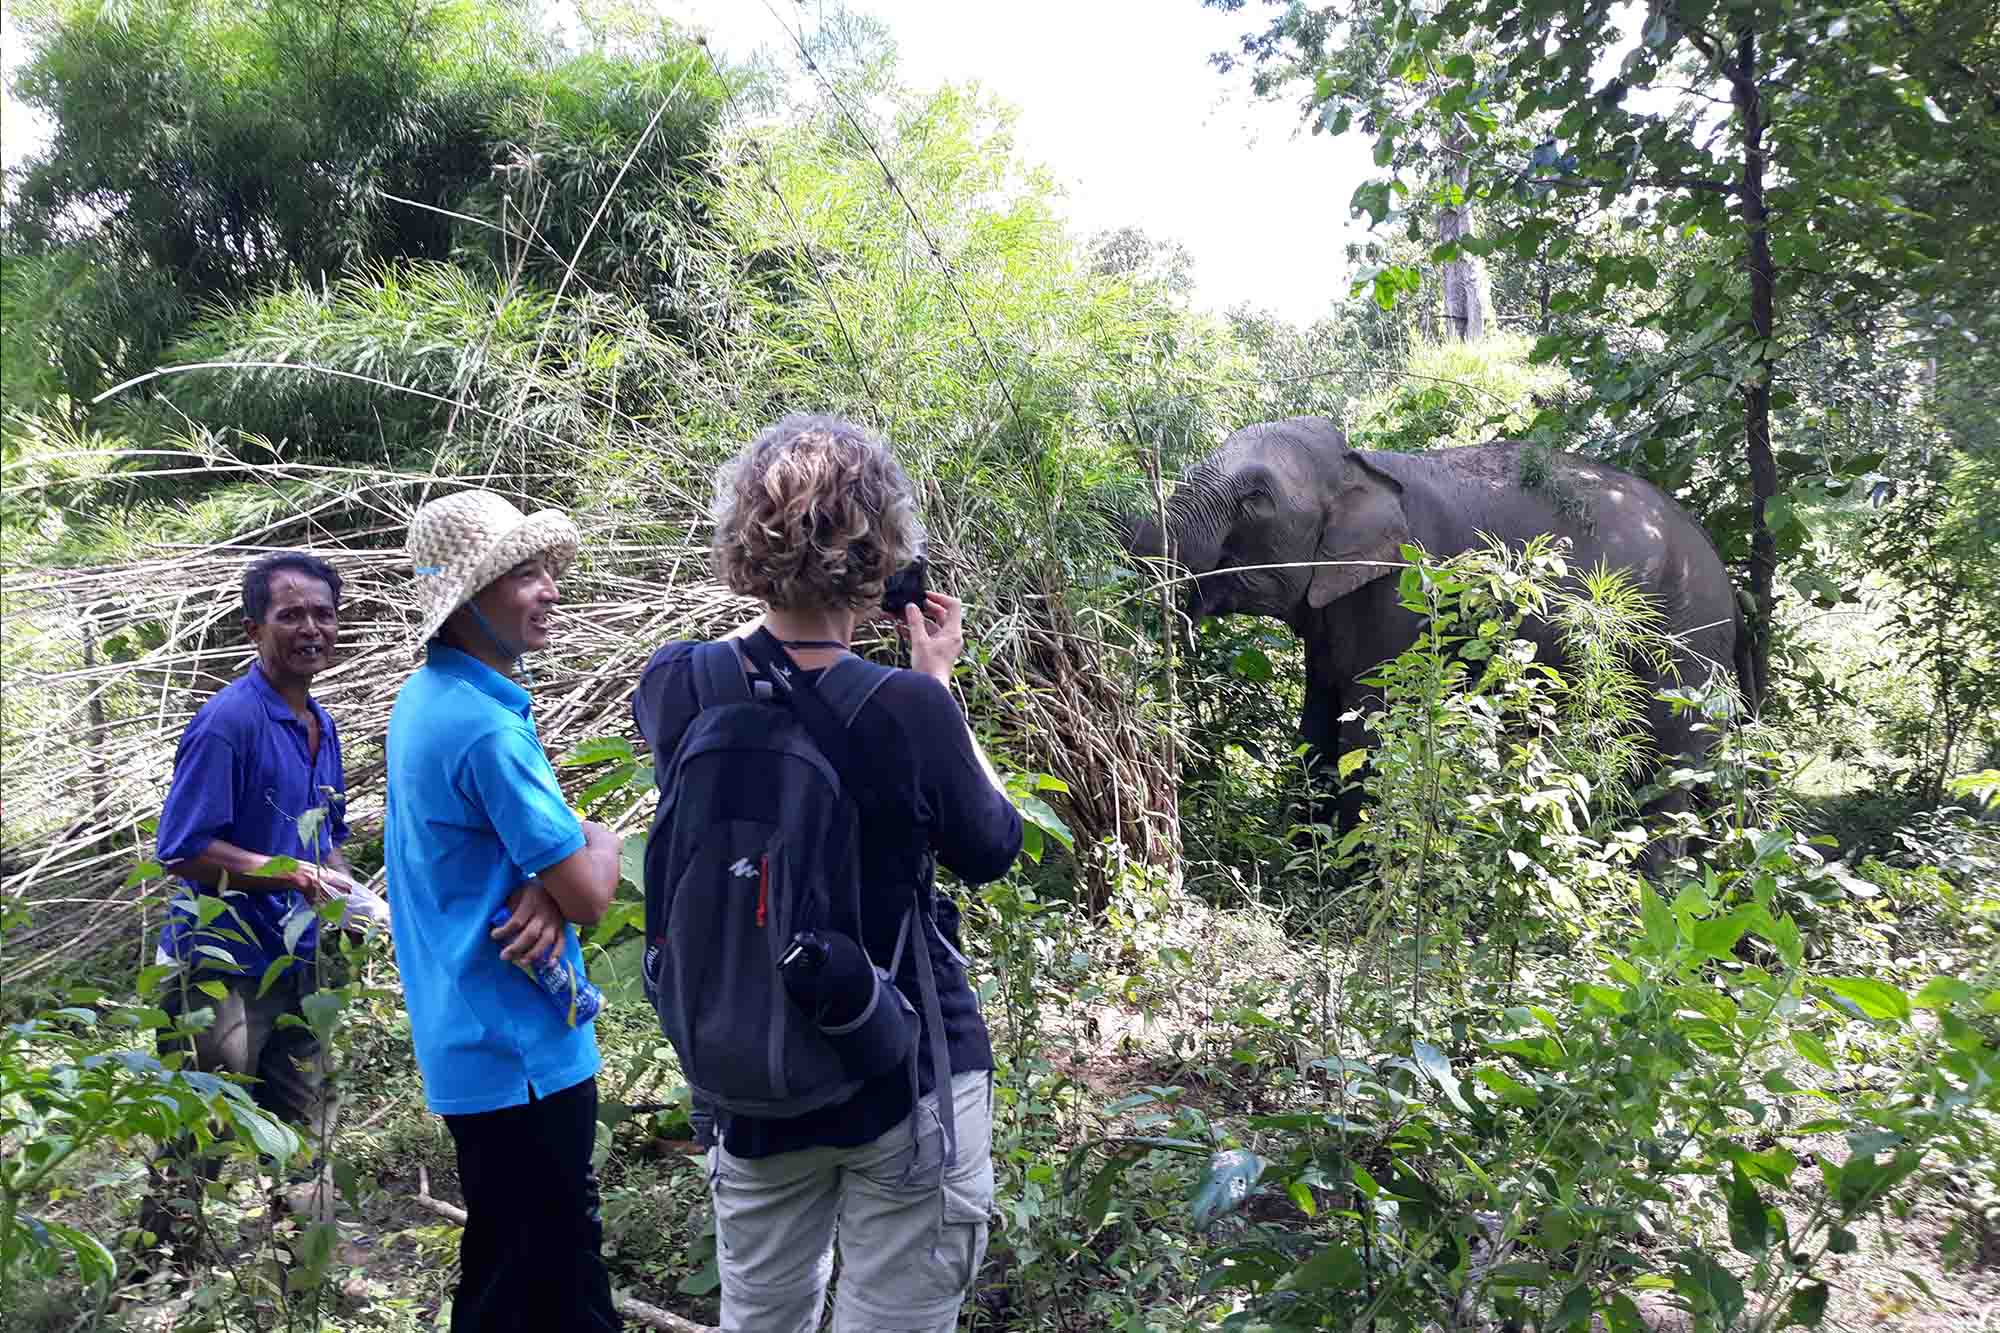 Vietnam’s first ethical elephant tourist initiative